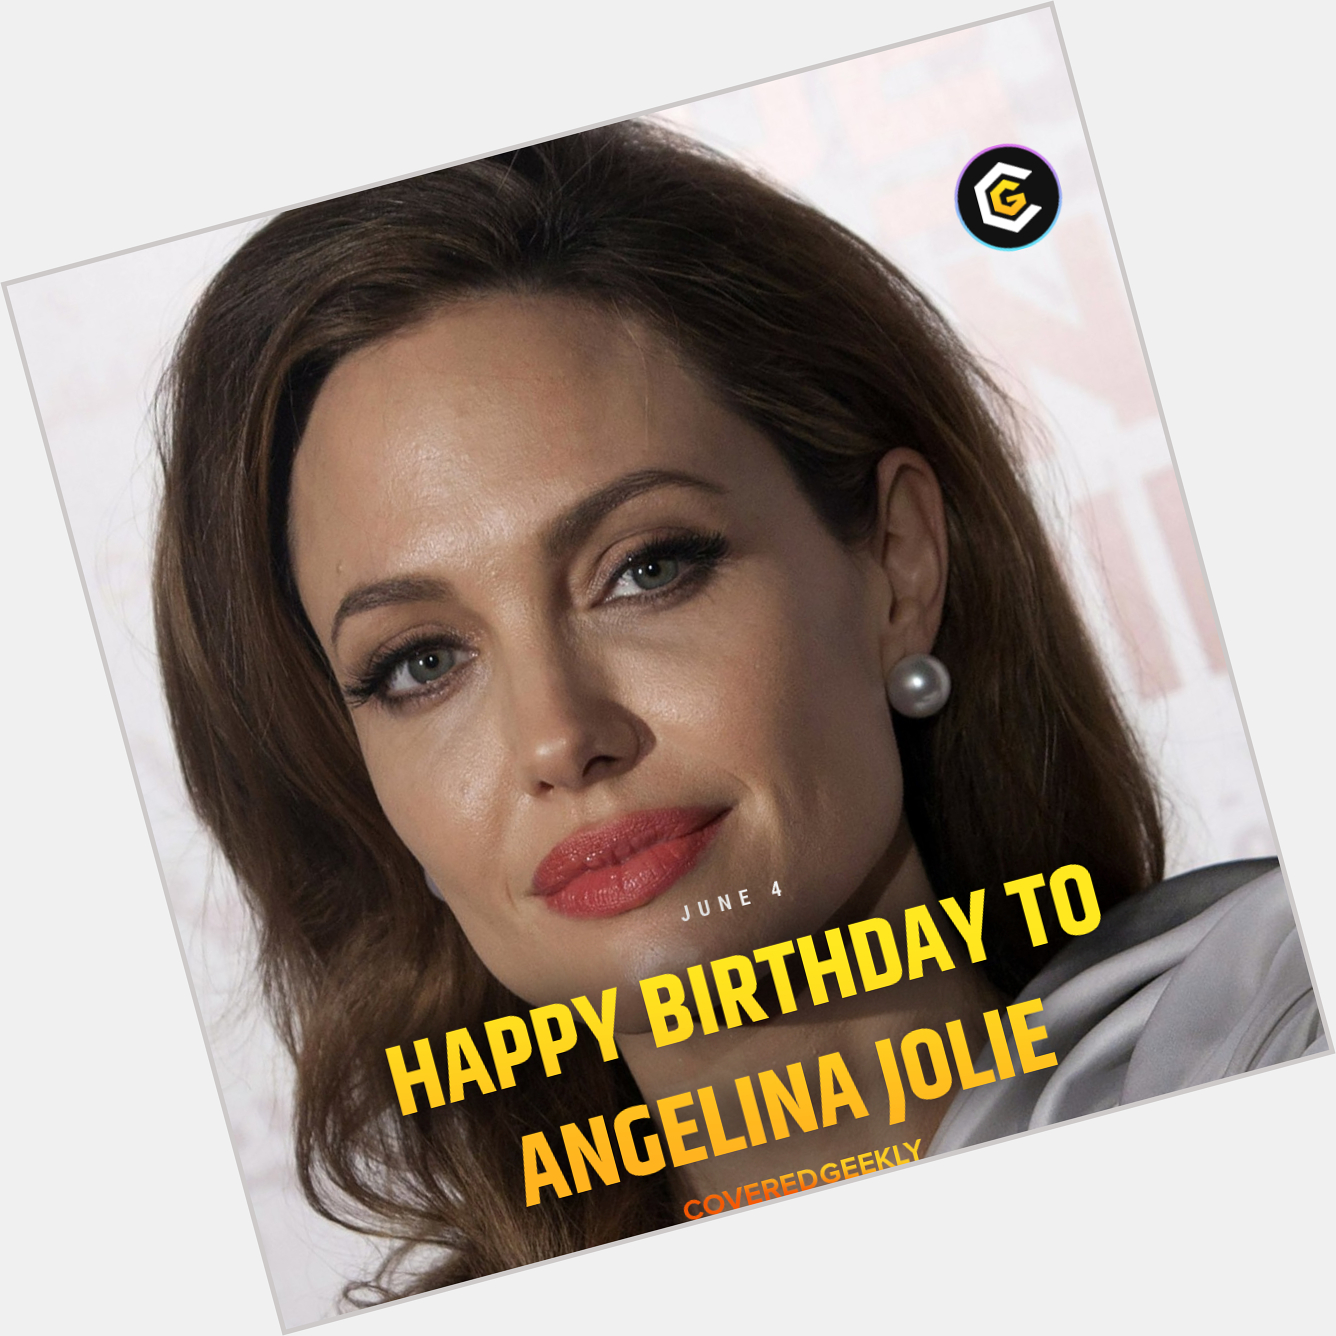 Happy Birthday to Angelina Jolie who turns 48 today! 